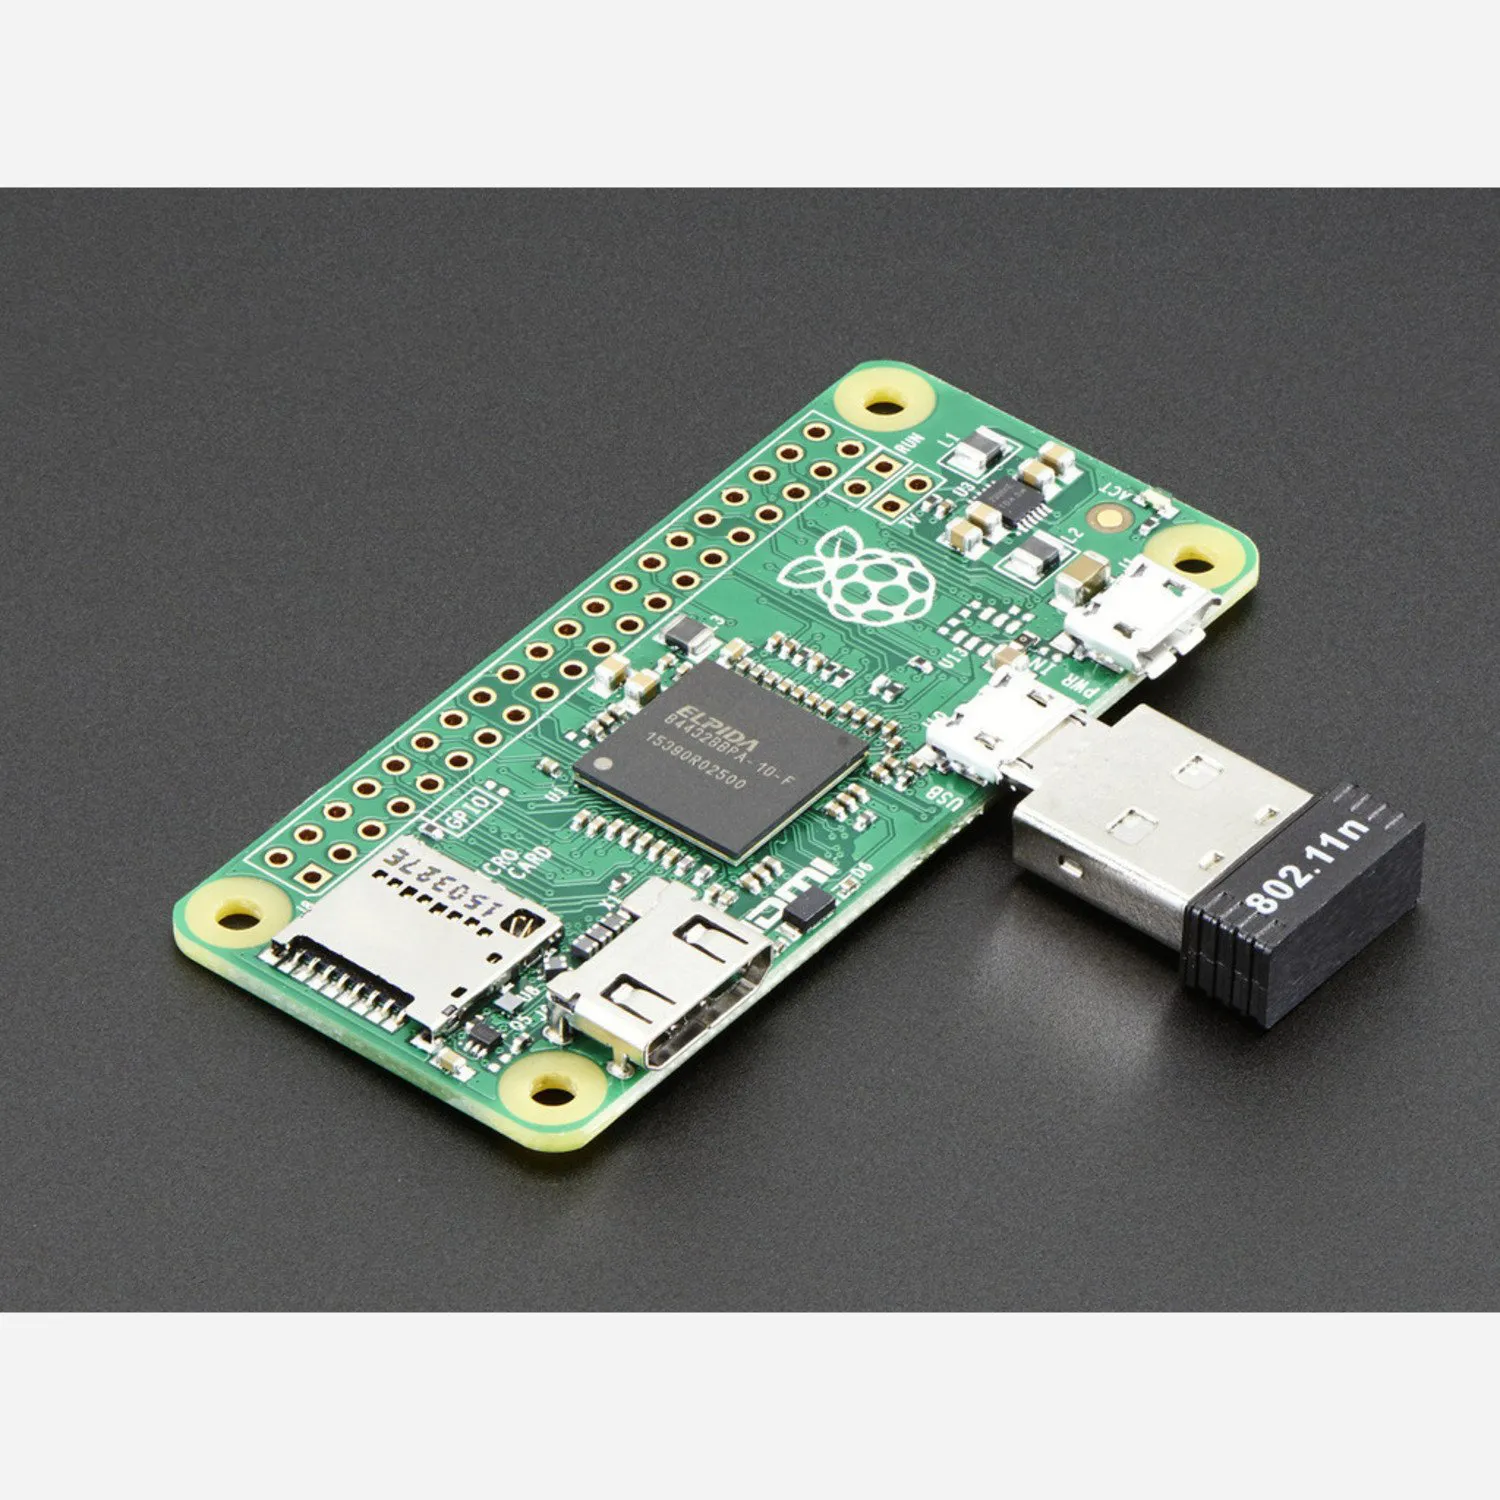 Photo of Tiny OTG Adapter - USB Micro to USB